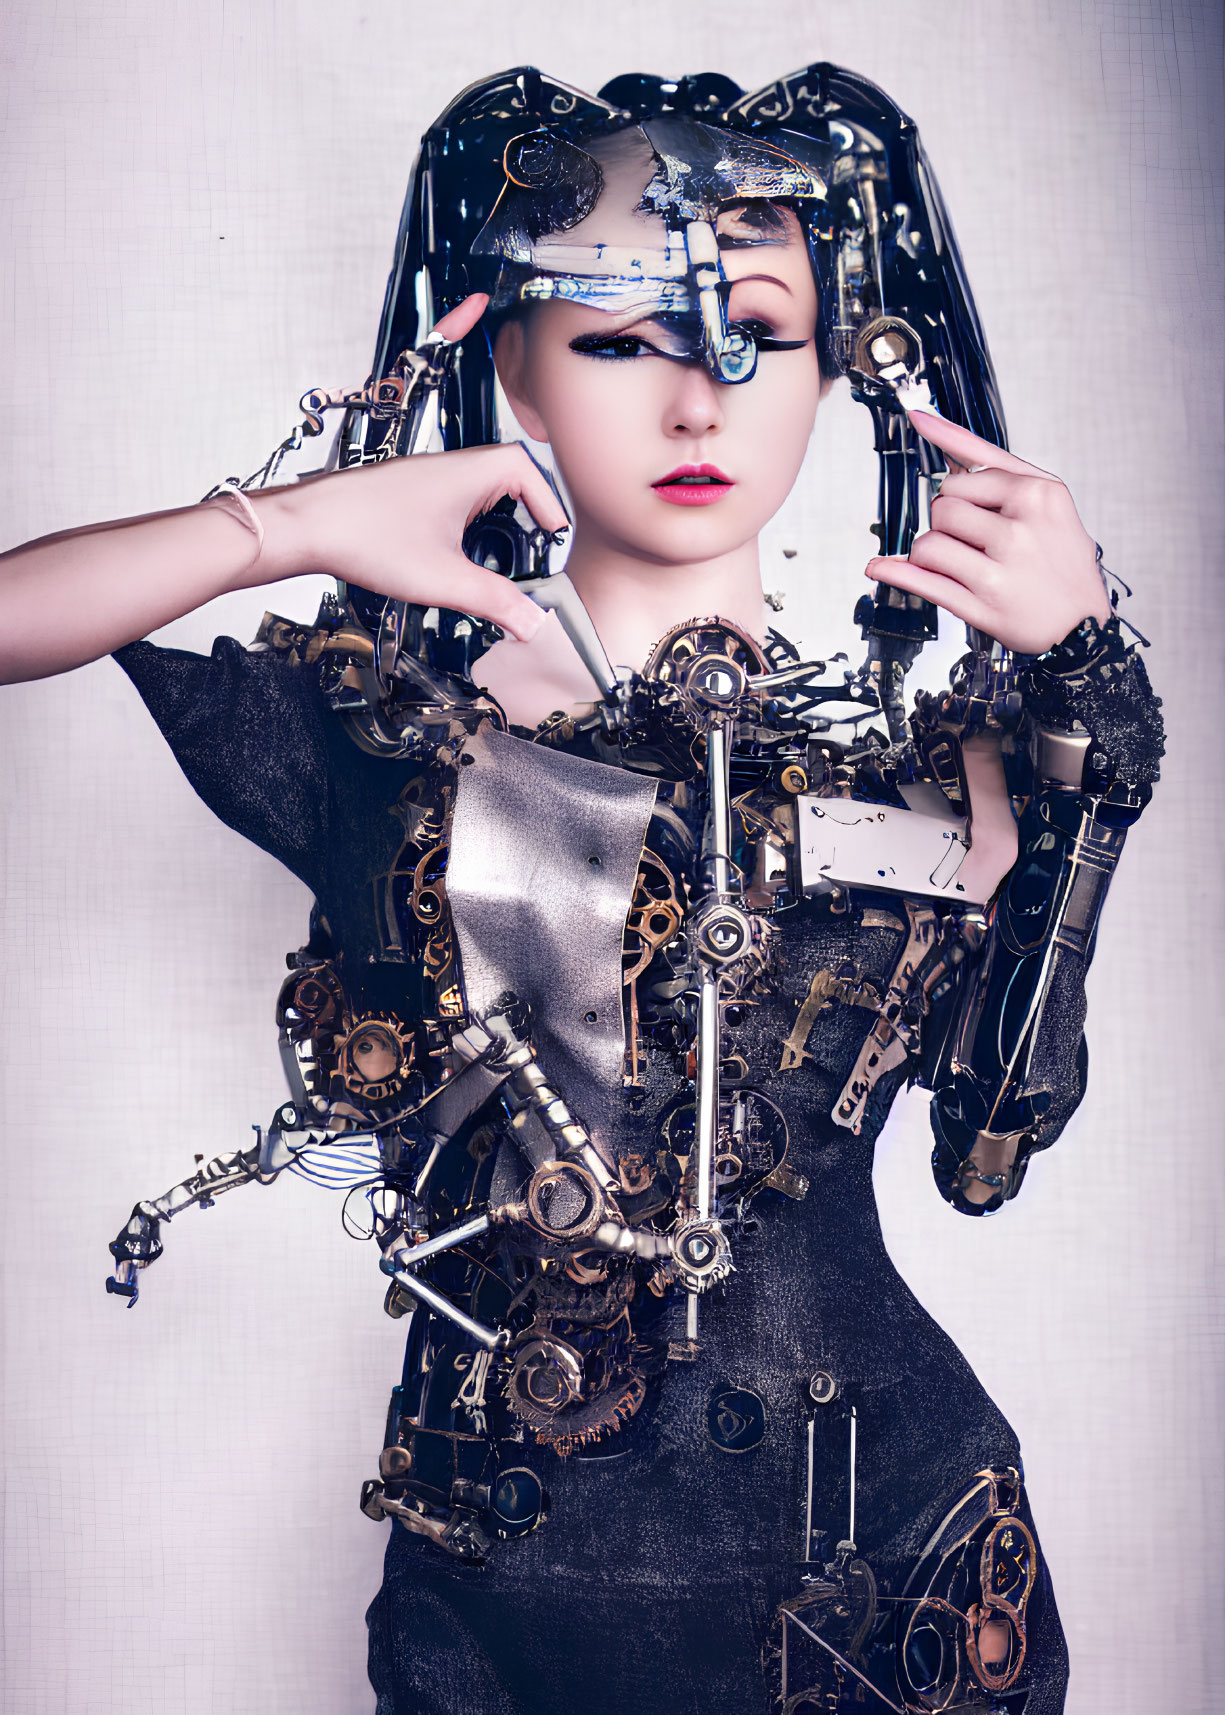 Futuristic portrait of woman with robotic attire and metallic makeup